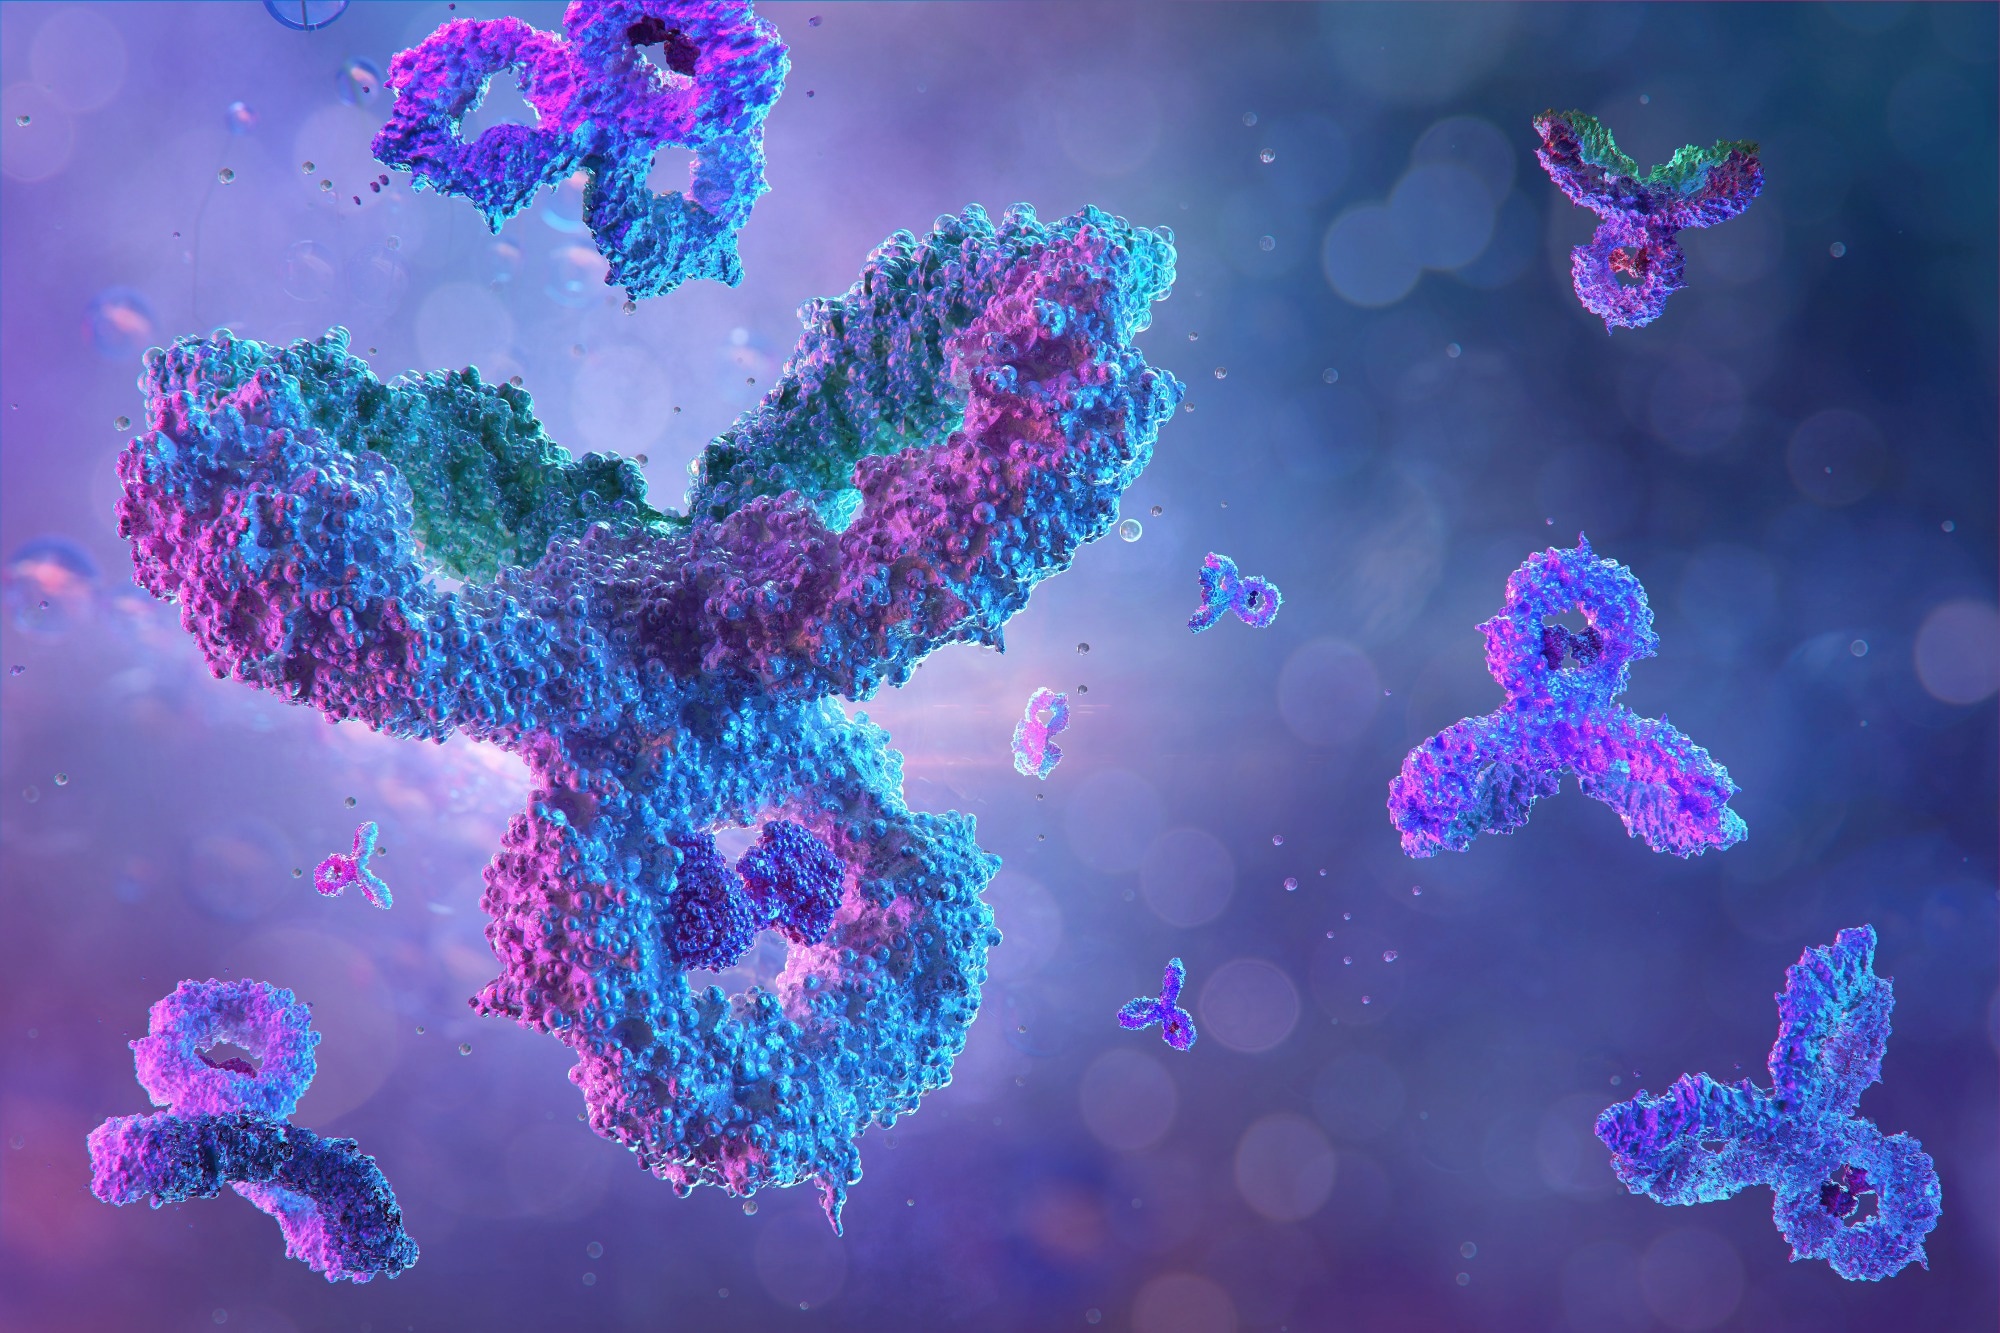 Study: Molecular fate-mapping of serum antibodies reveals the effects of antigenic imprinting on repeated immunization. Image Credit: Corona Borealis Studio/Shutterstock